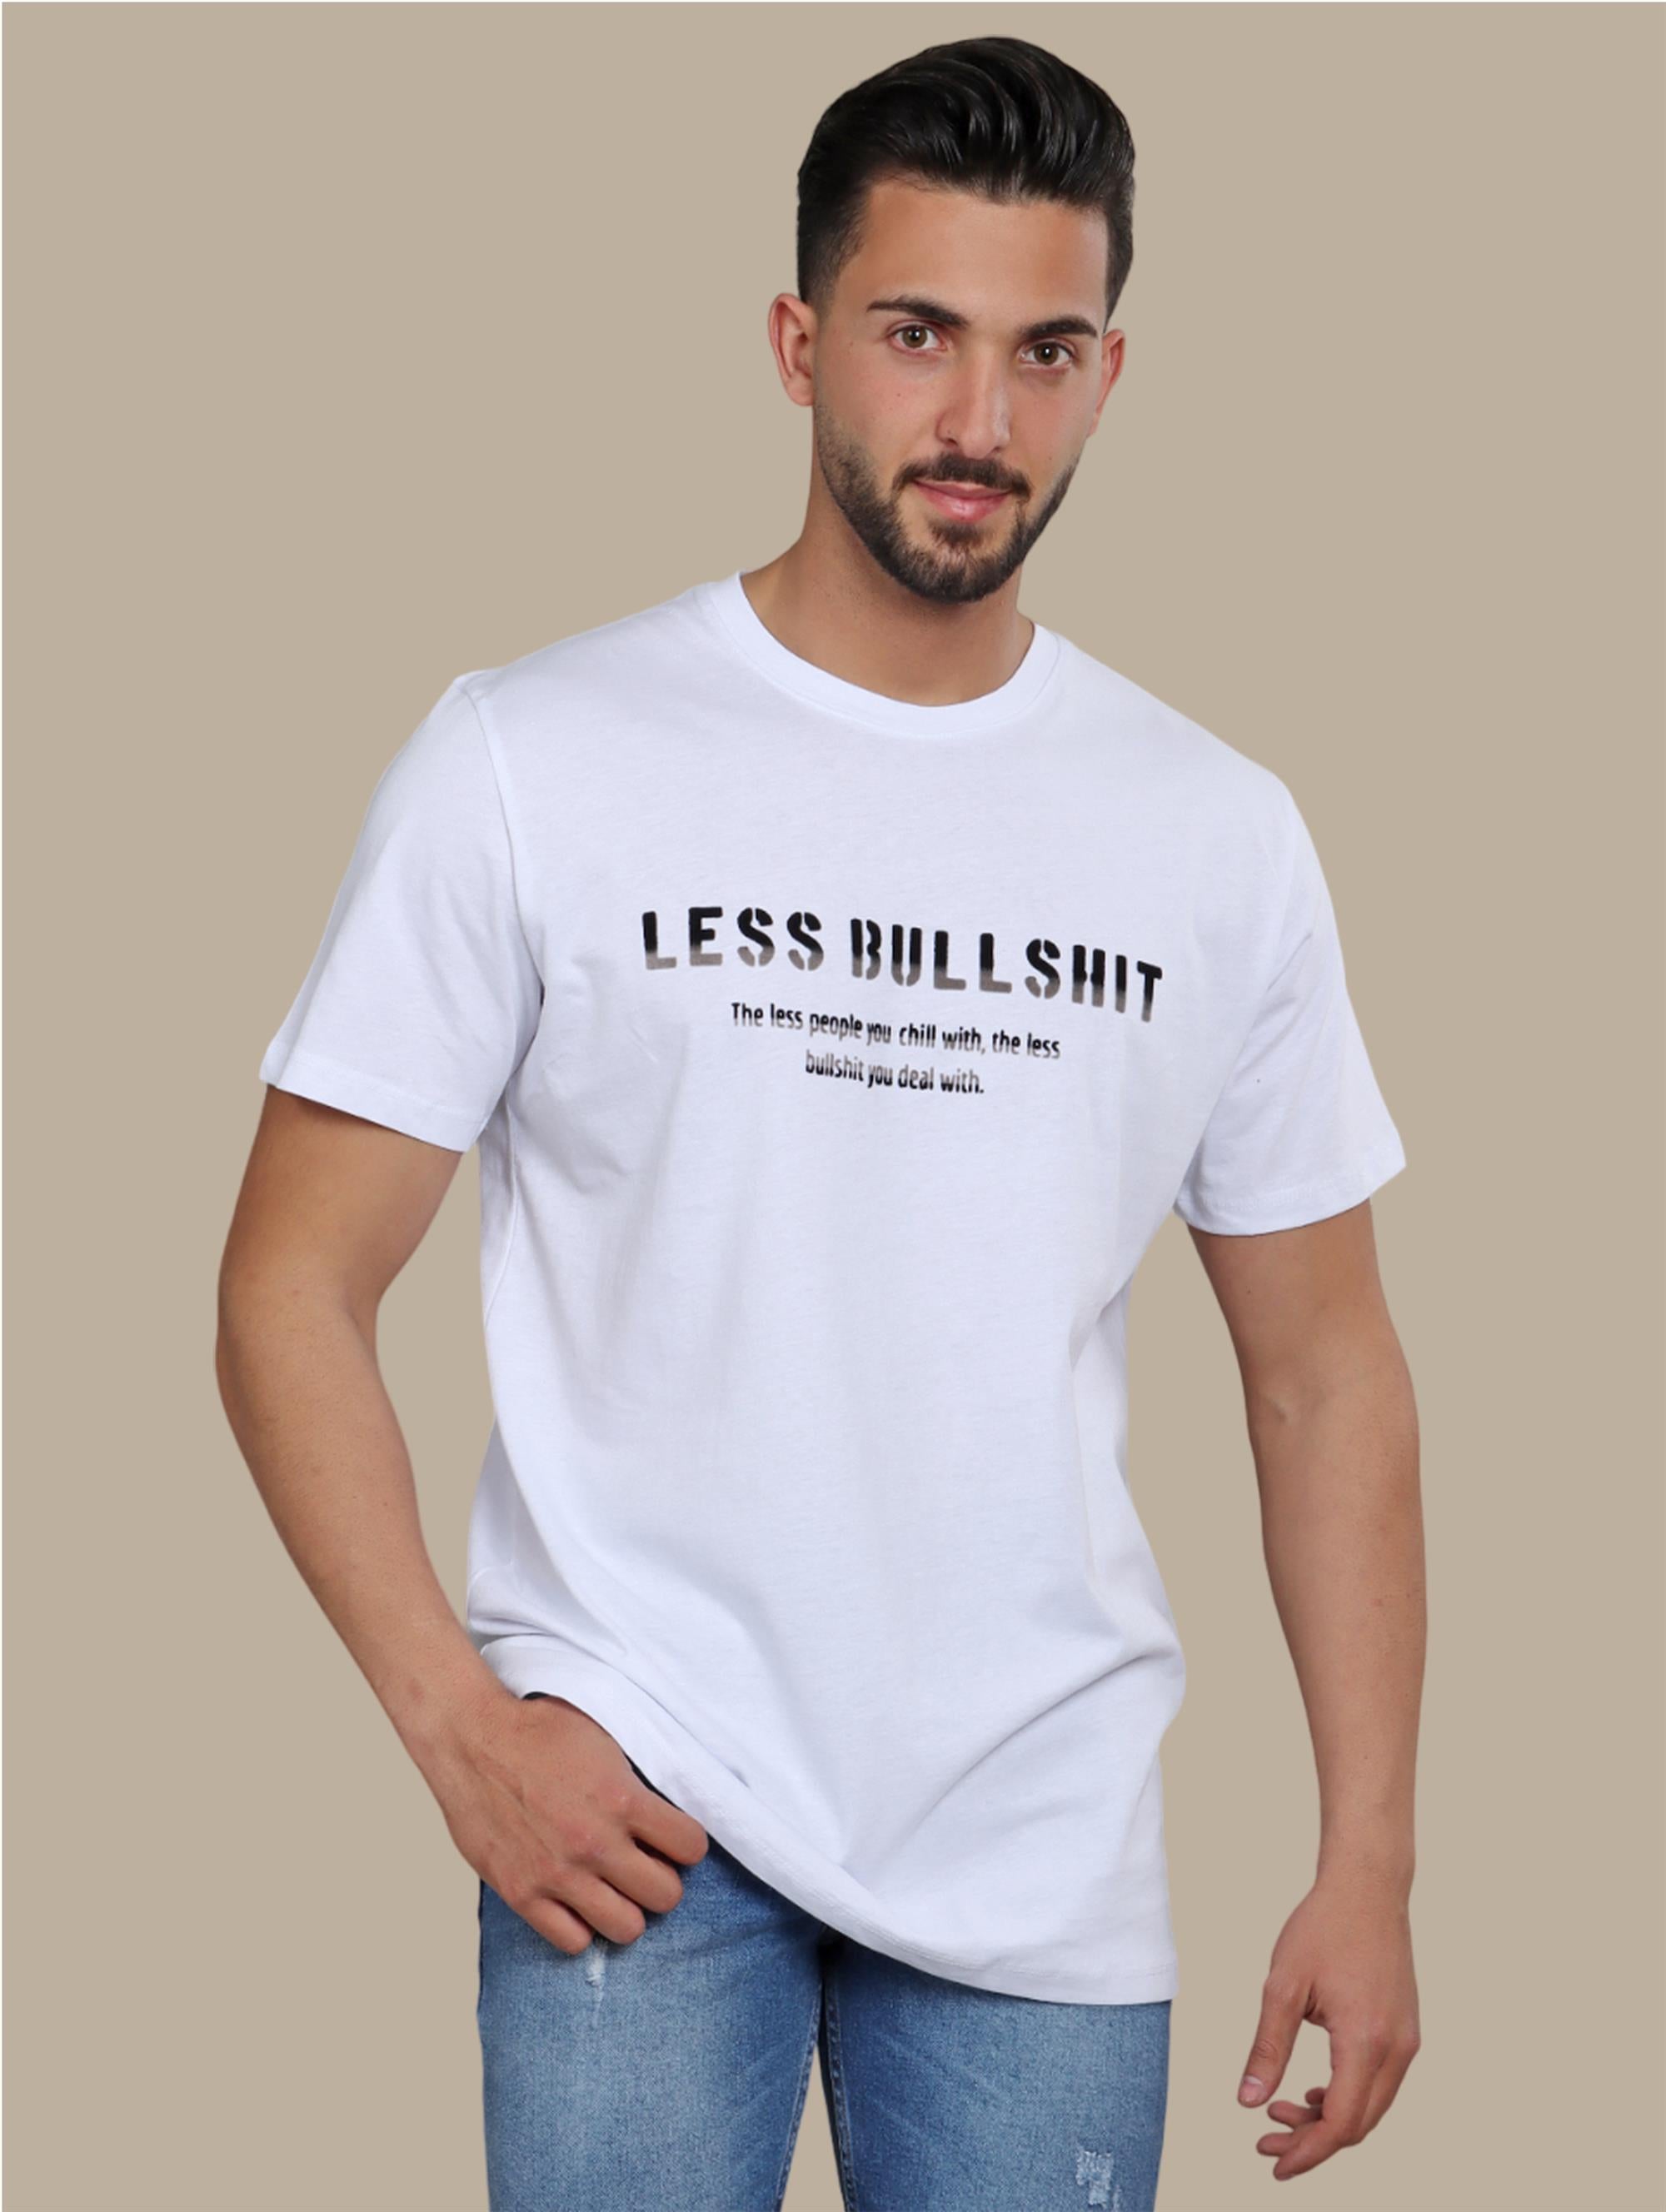 T-shirt Printed Less Bullshit | White